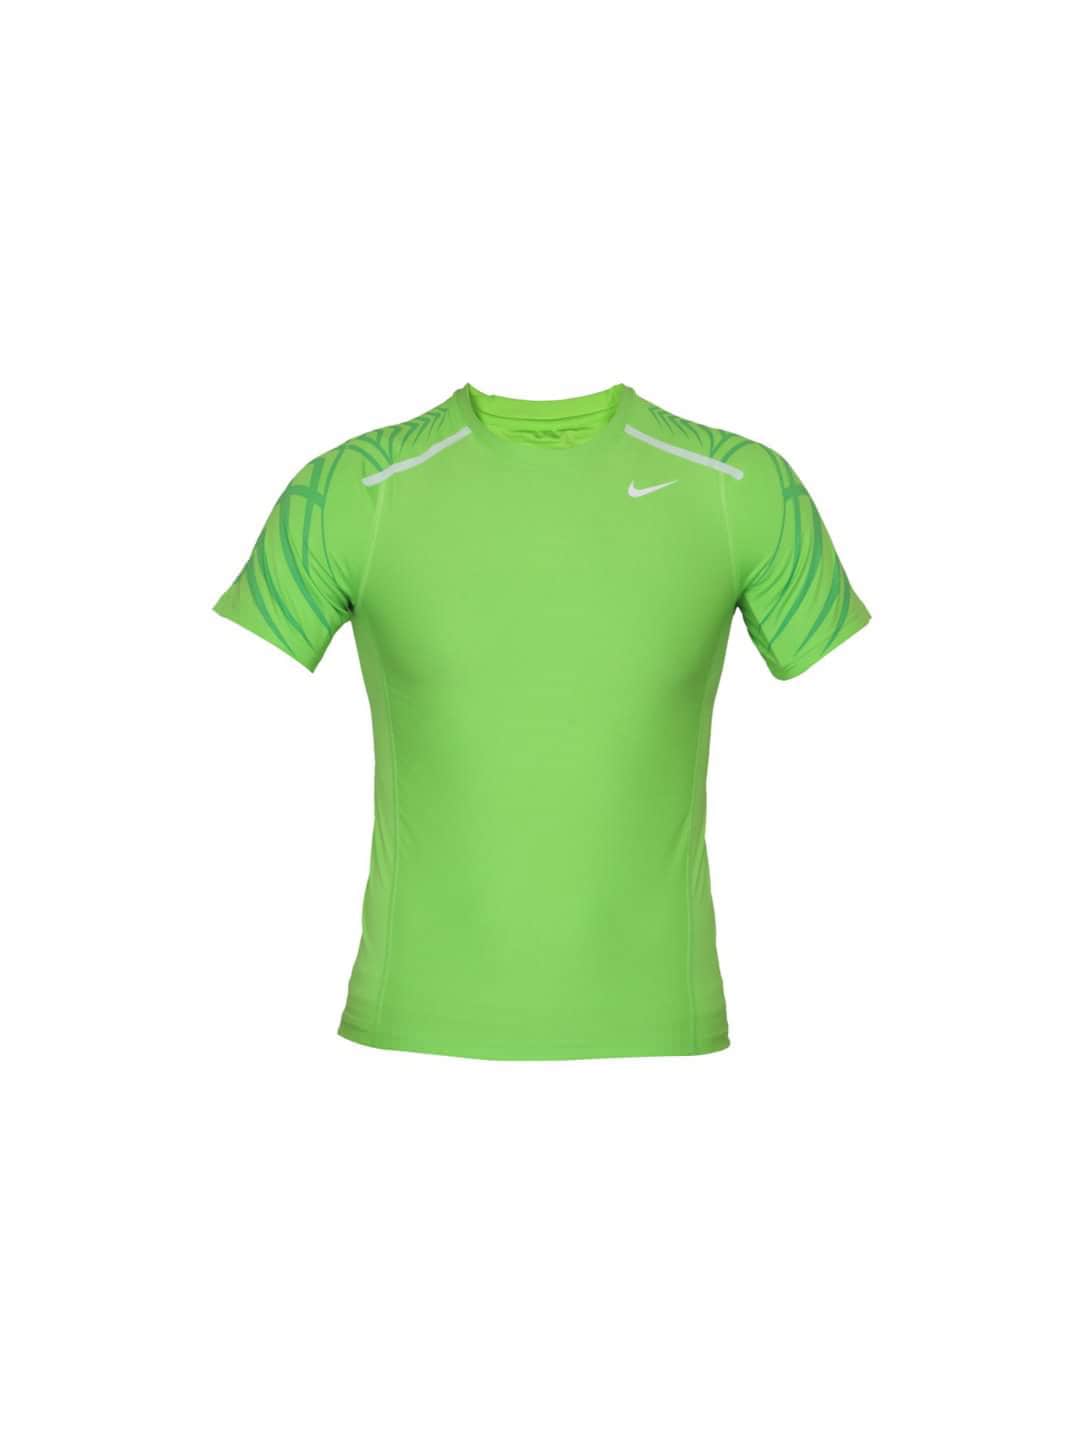 Nike Kids Boys Contemporary Athlete Green T-shirt